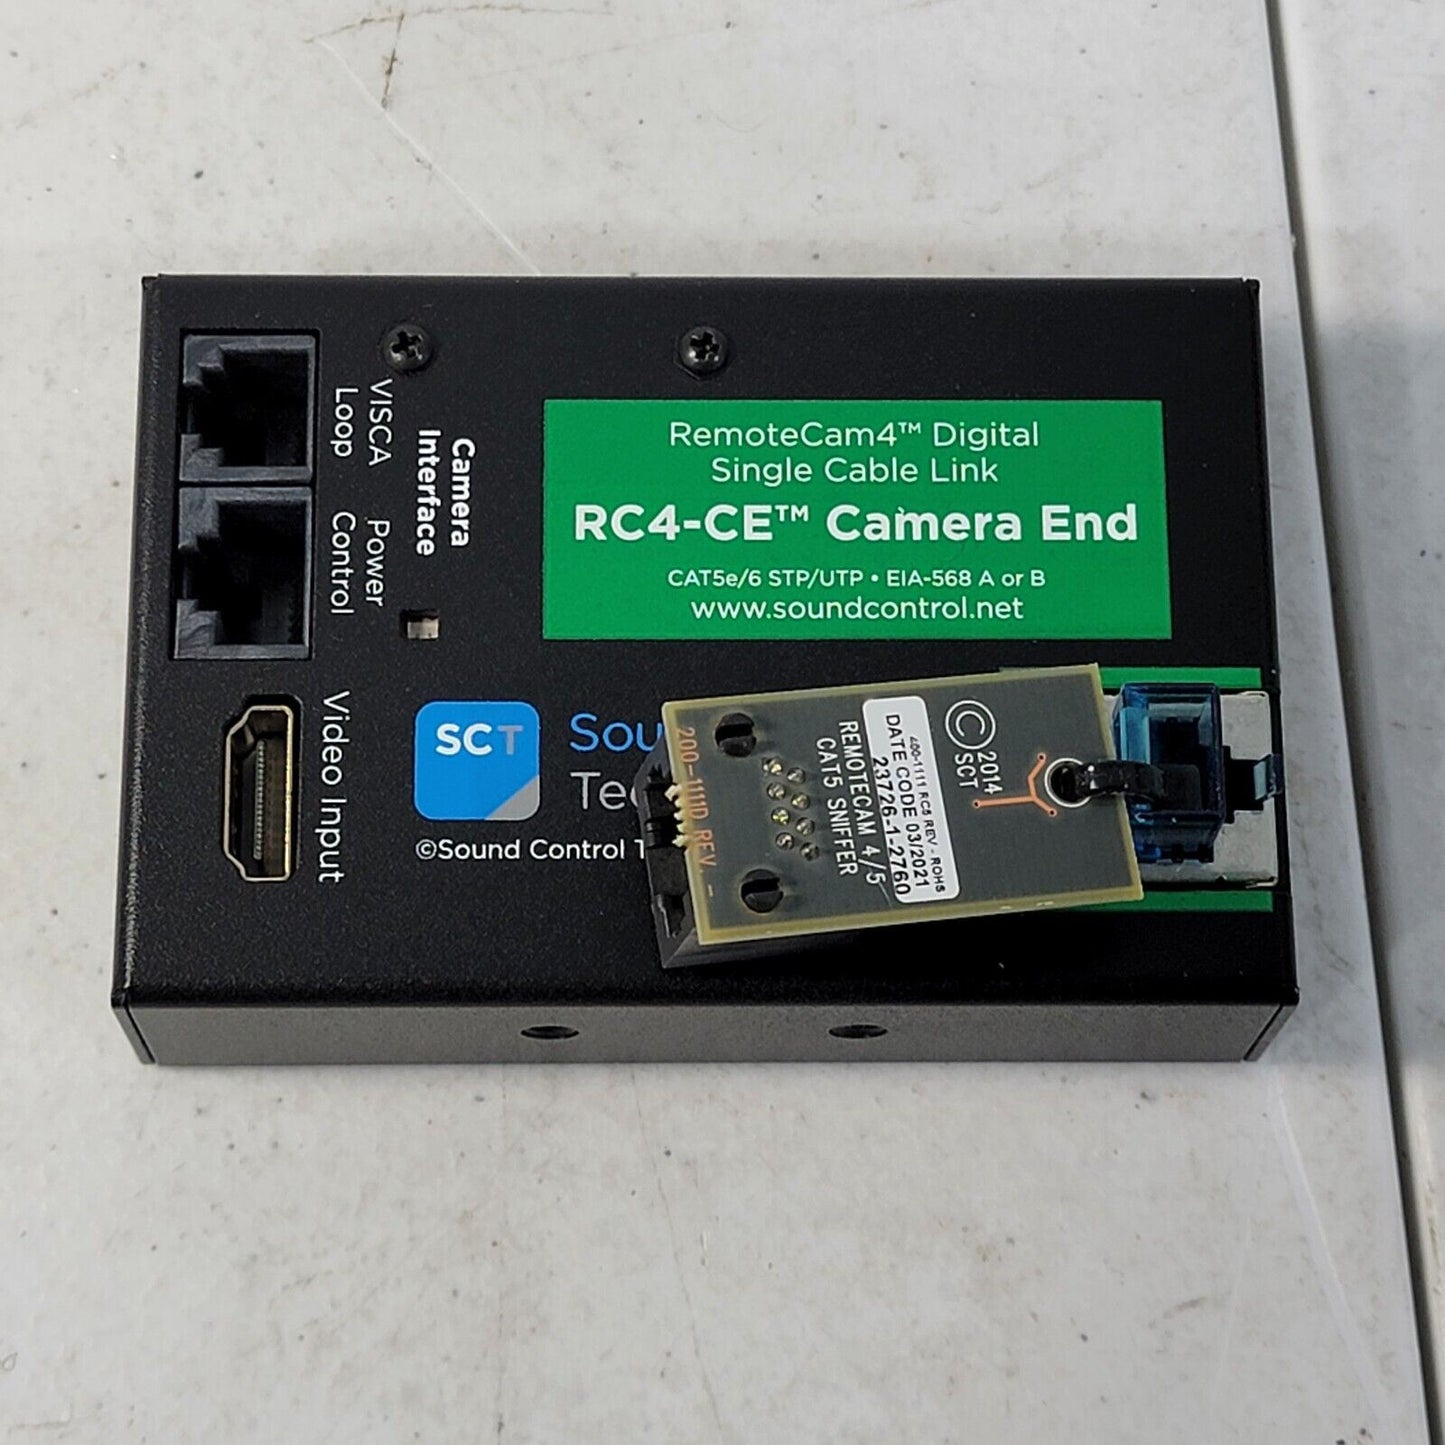 Sound Control SCT RemoteCam5 Camera-End RC4-CE w/ Cat5 Sniffer